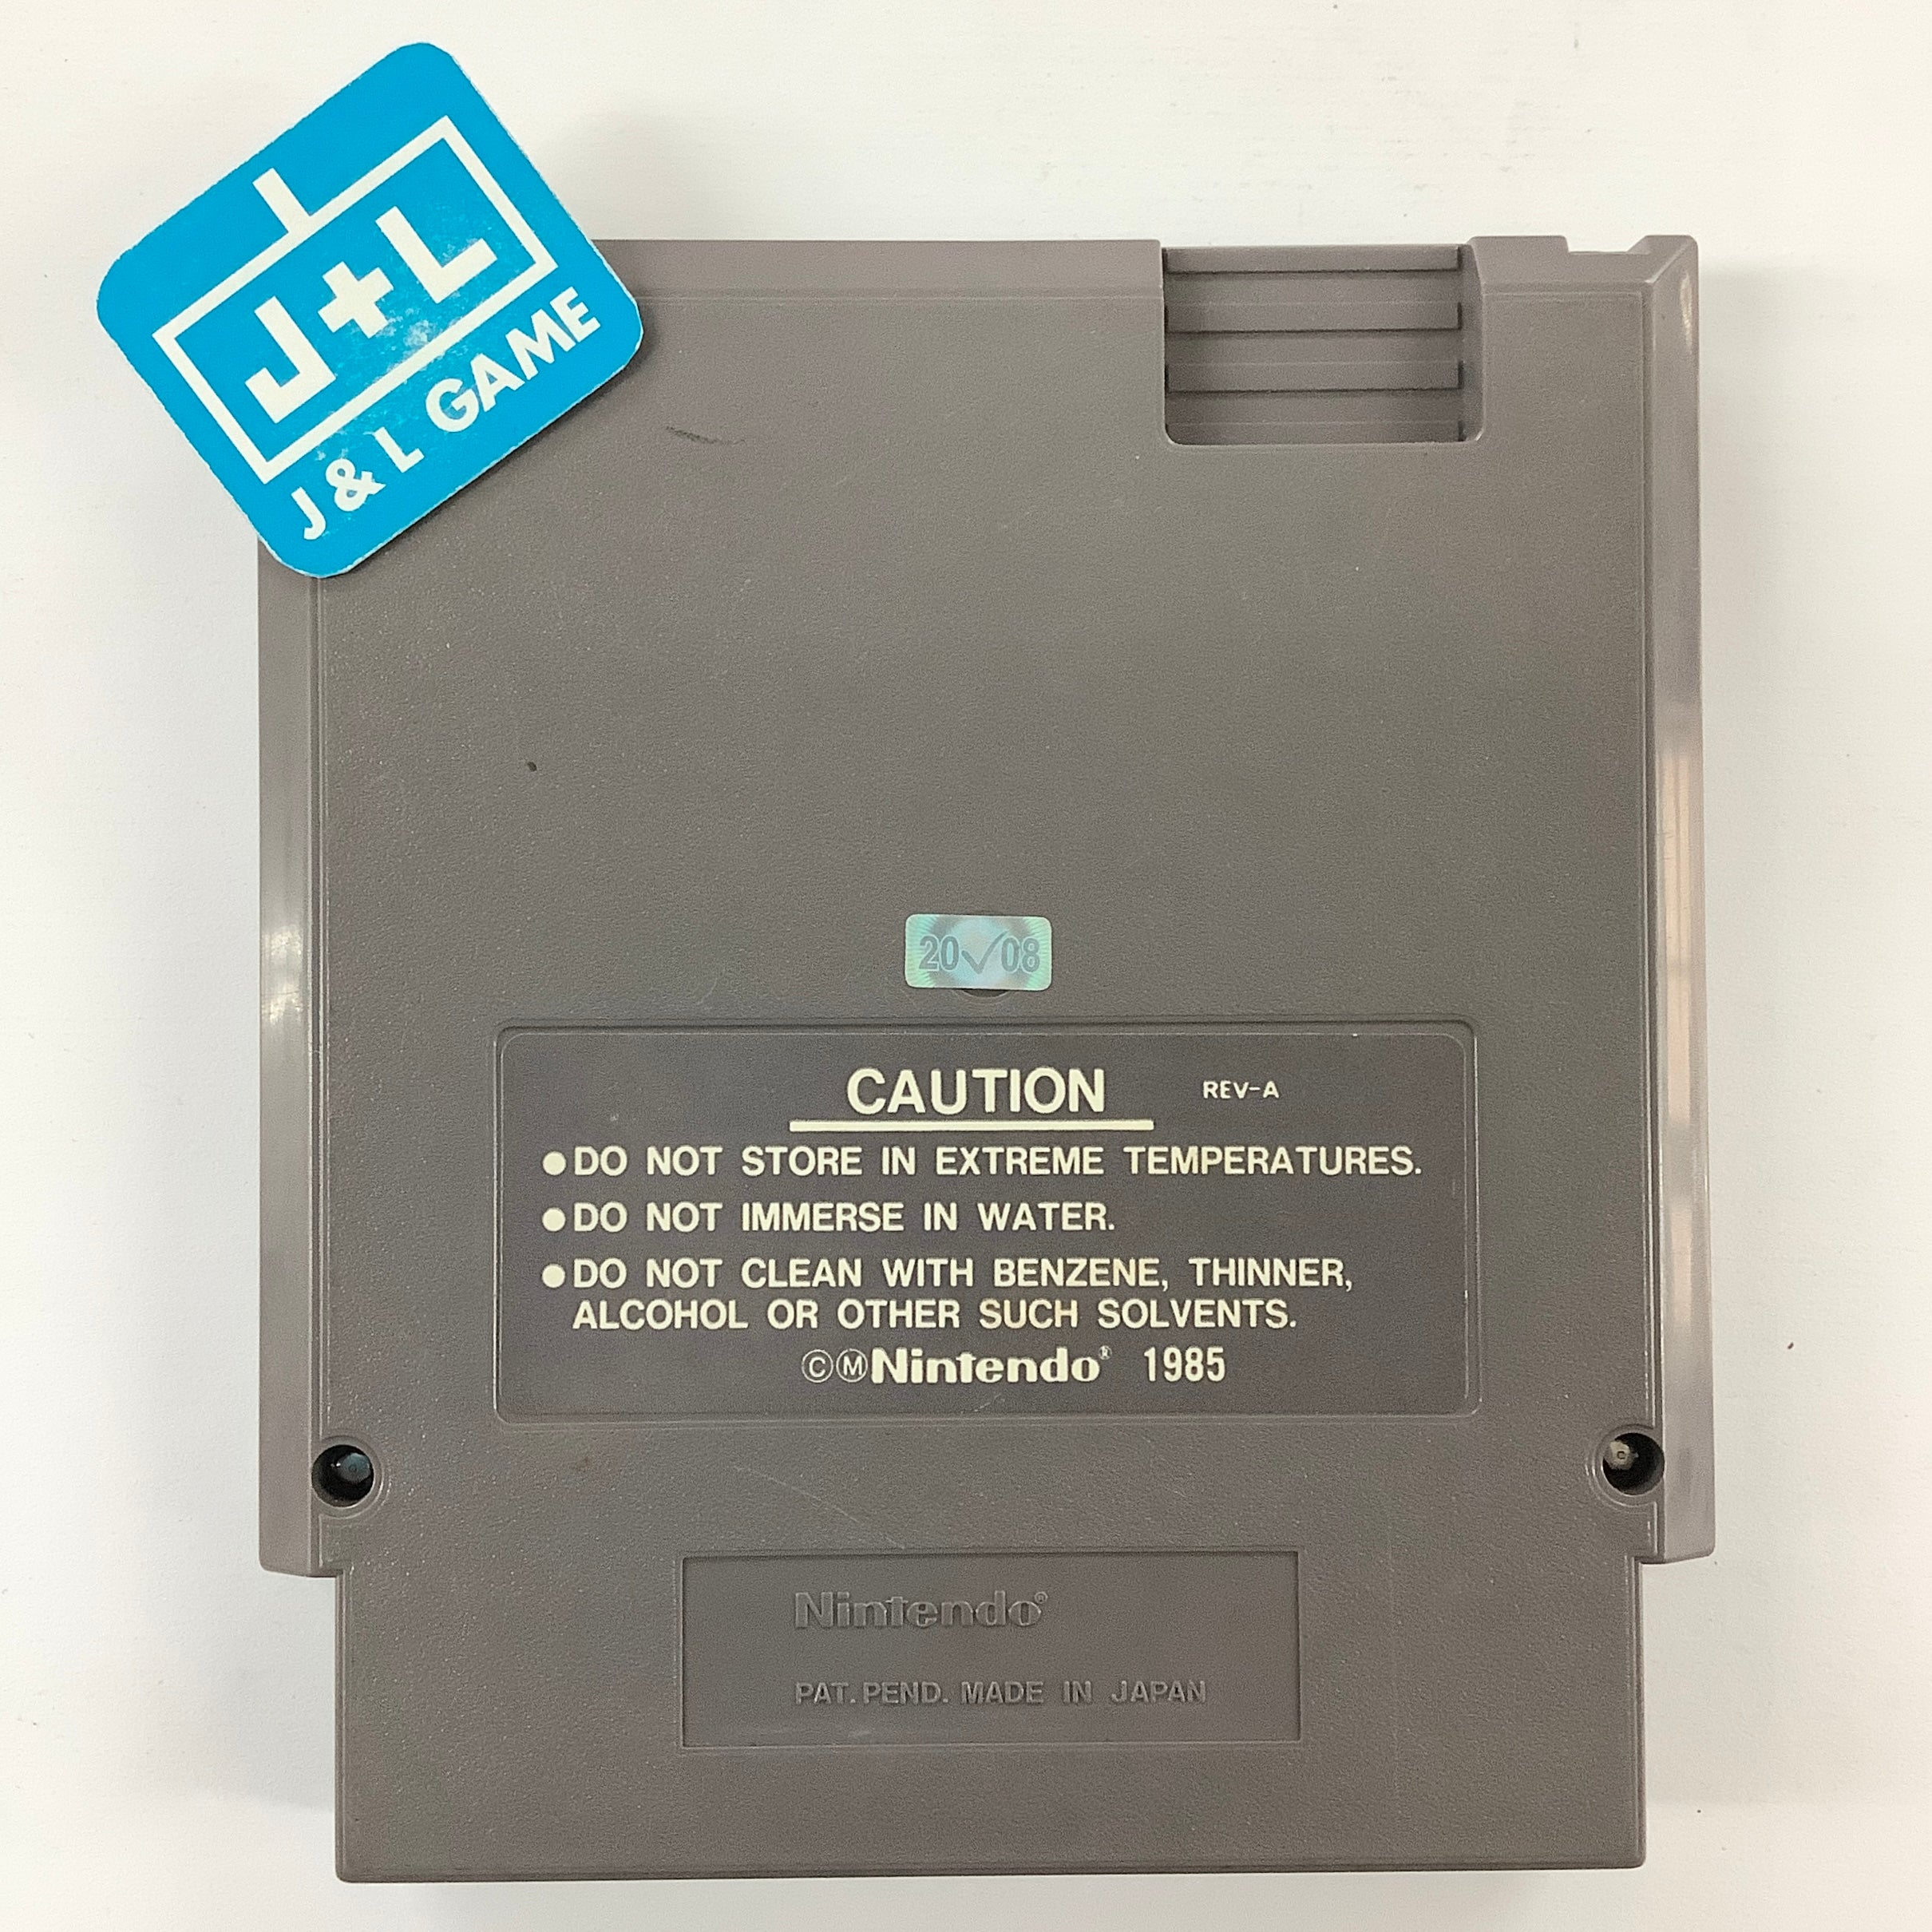 Pictionary - (NES) Nintendo Entertainment System [Pre-Owned] Video Games LJN Ltd.   